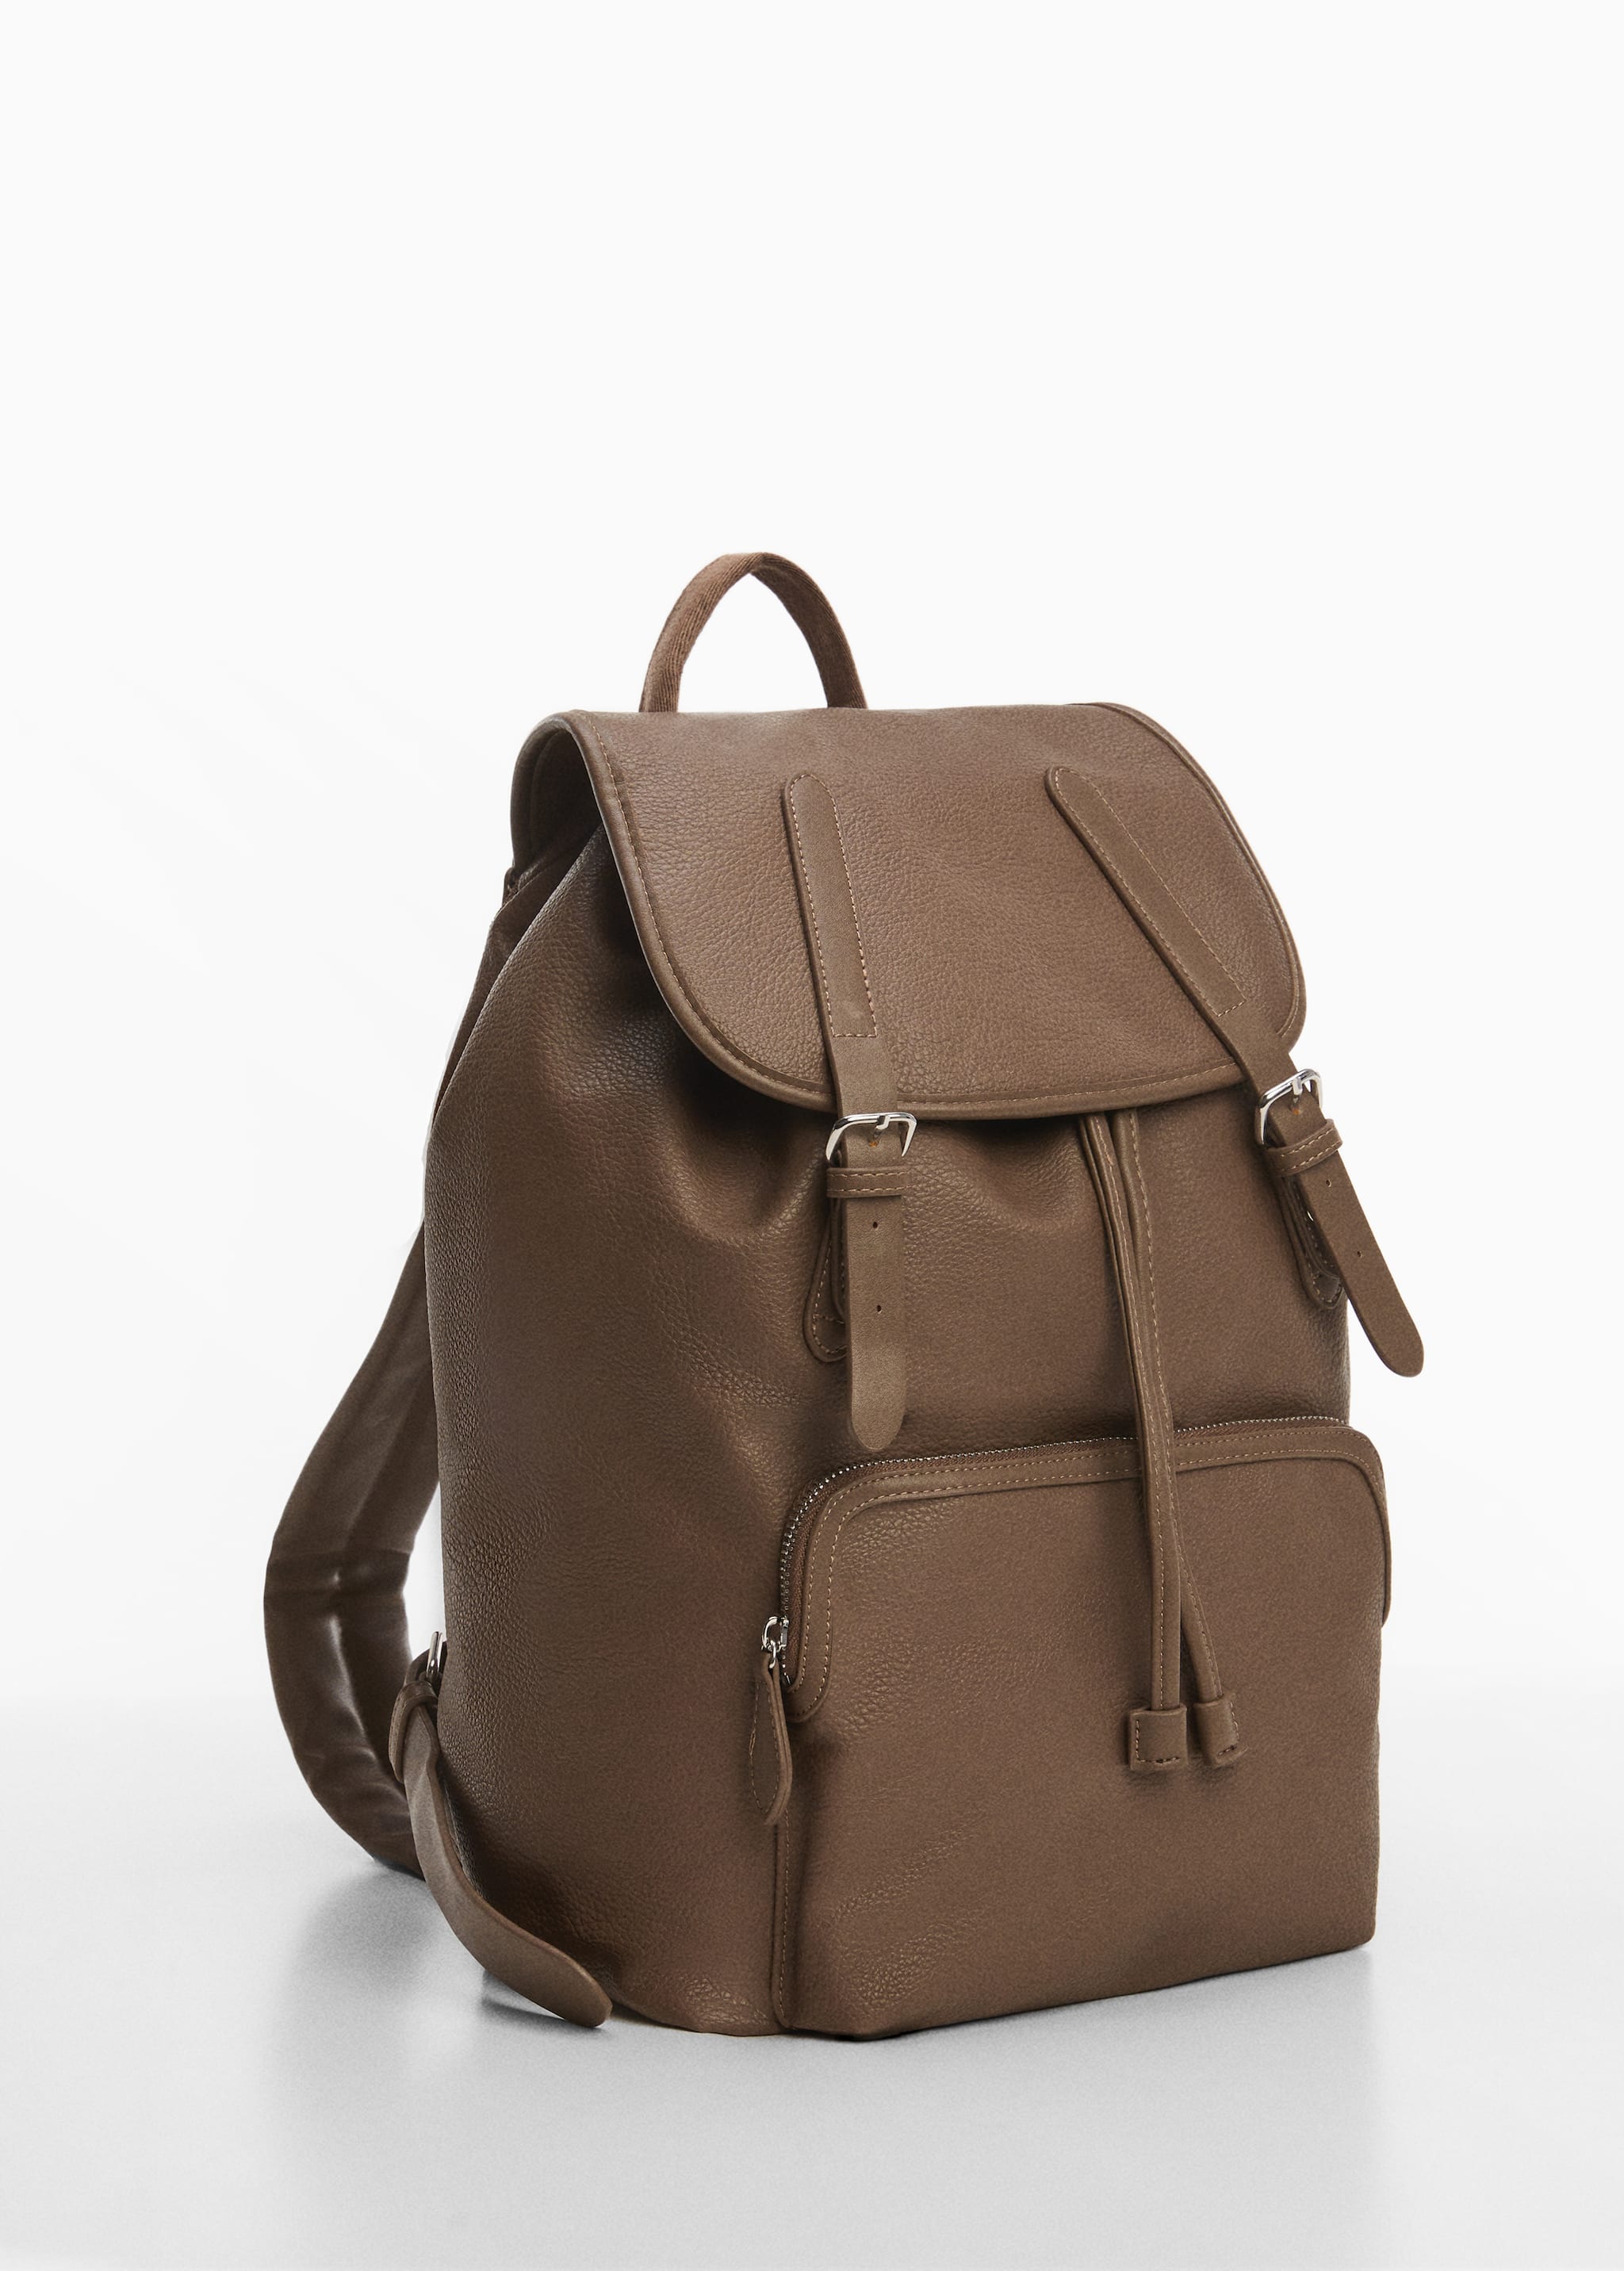 Leather-effect backpack - Medium plane